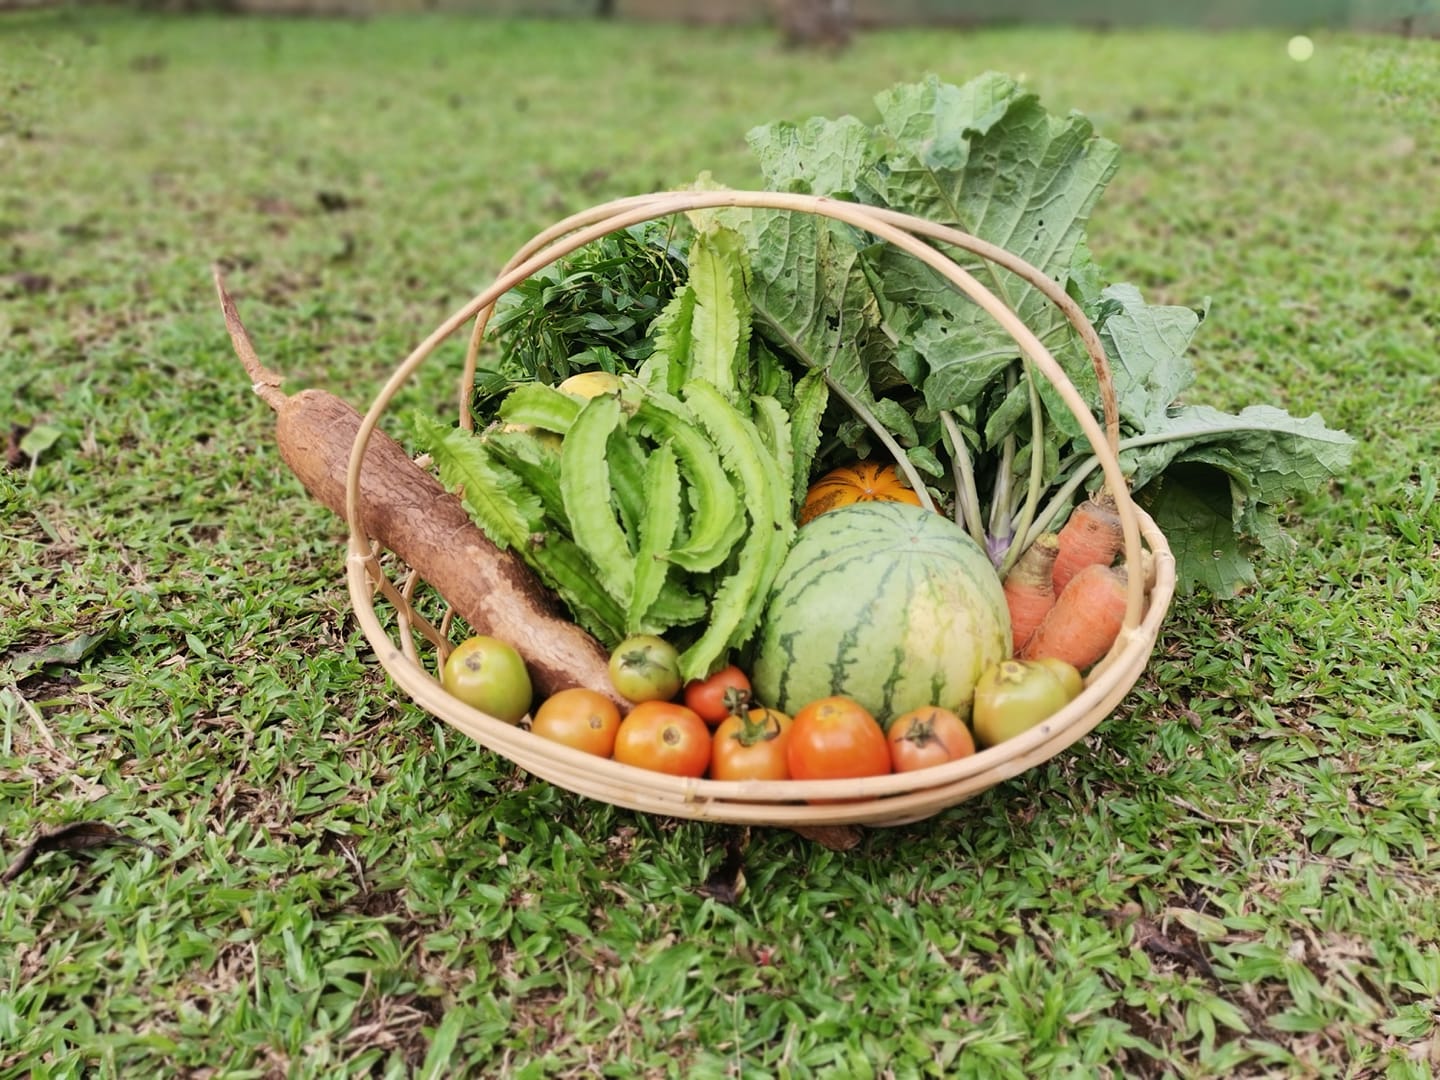 Renaissance Sri Lanka, MONLAR and Greenfem Launch a Live Webinar Series on Building Sri Lankan Model of Organic Farming